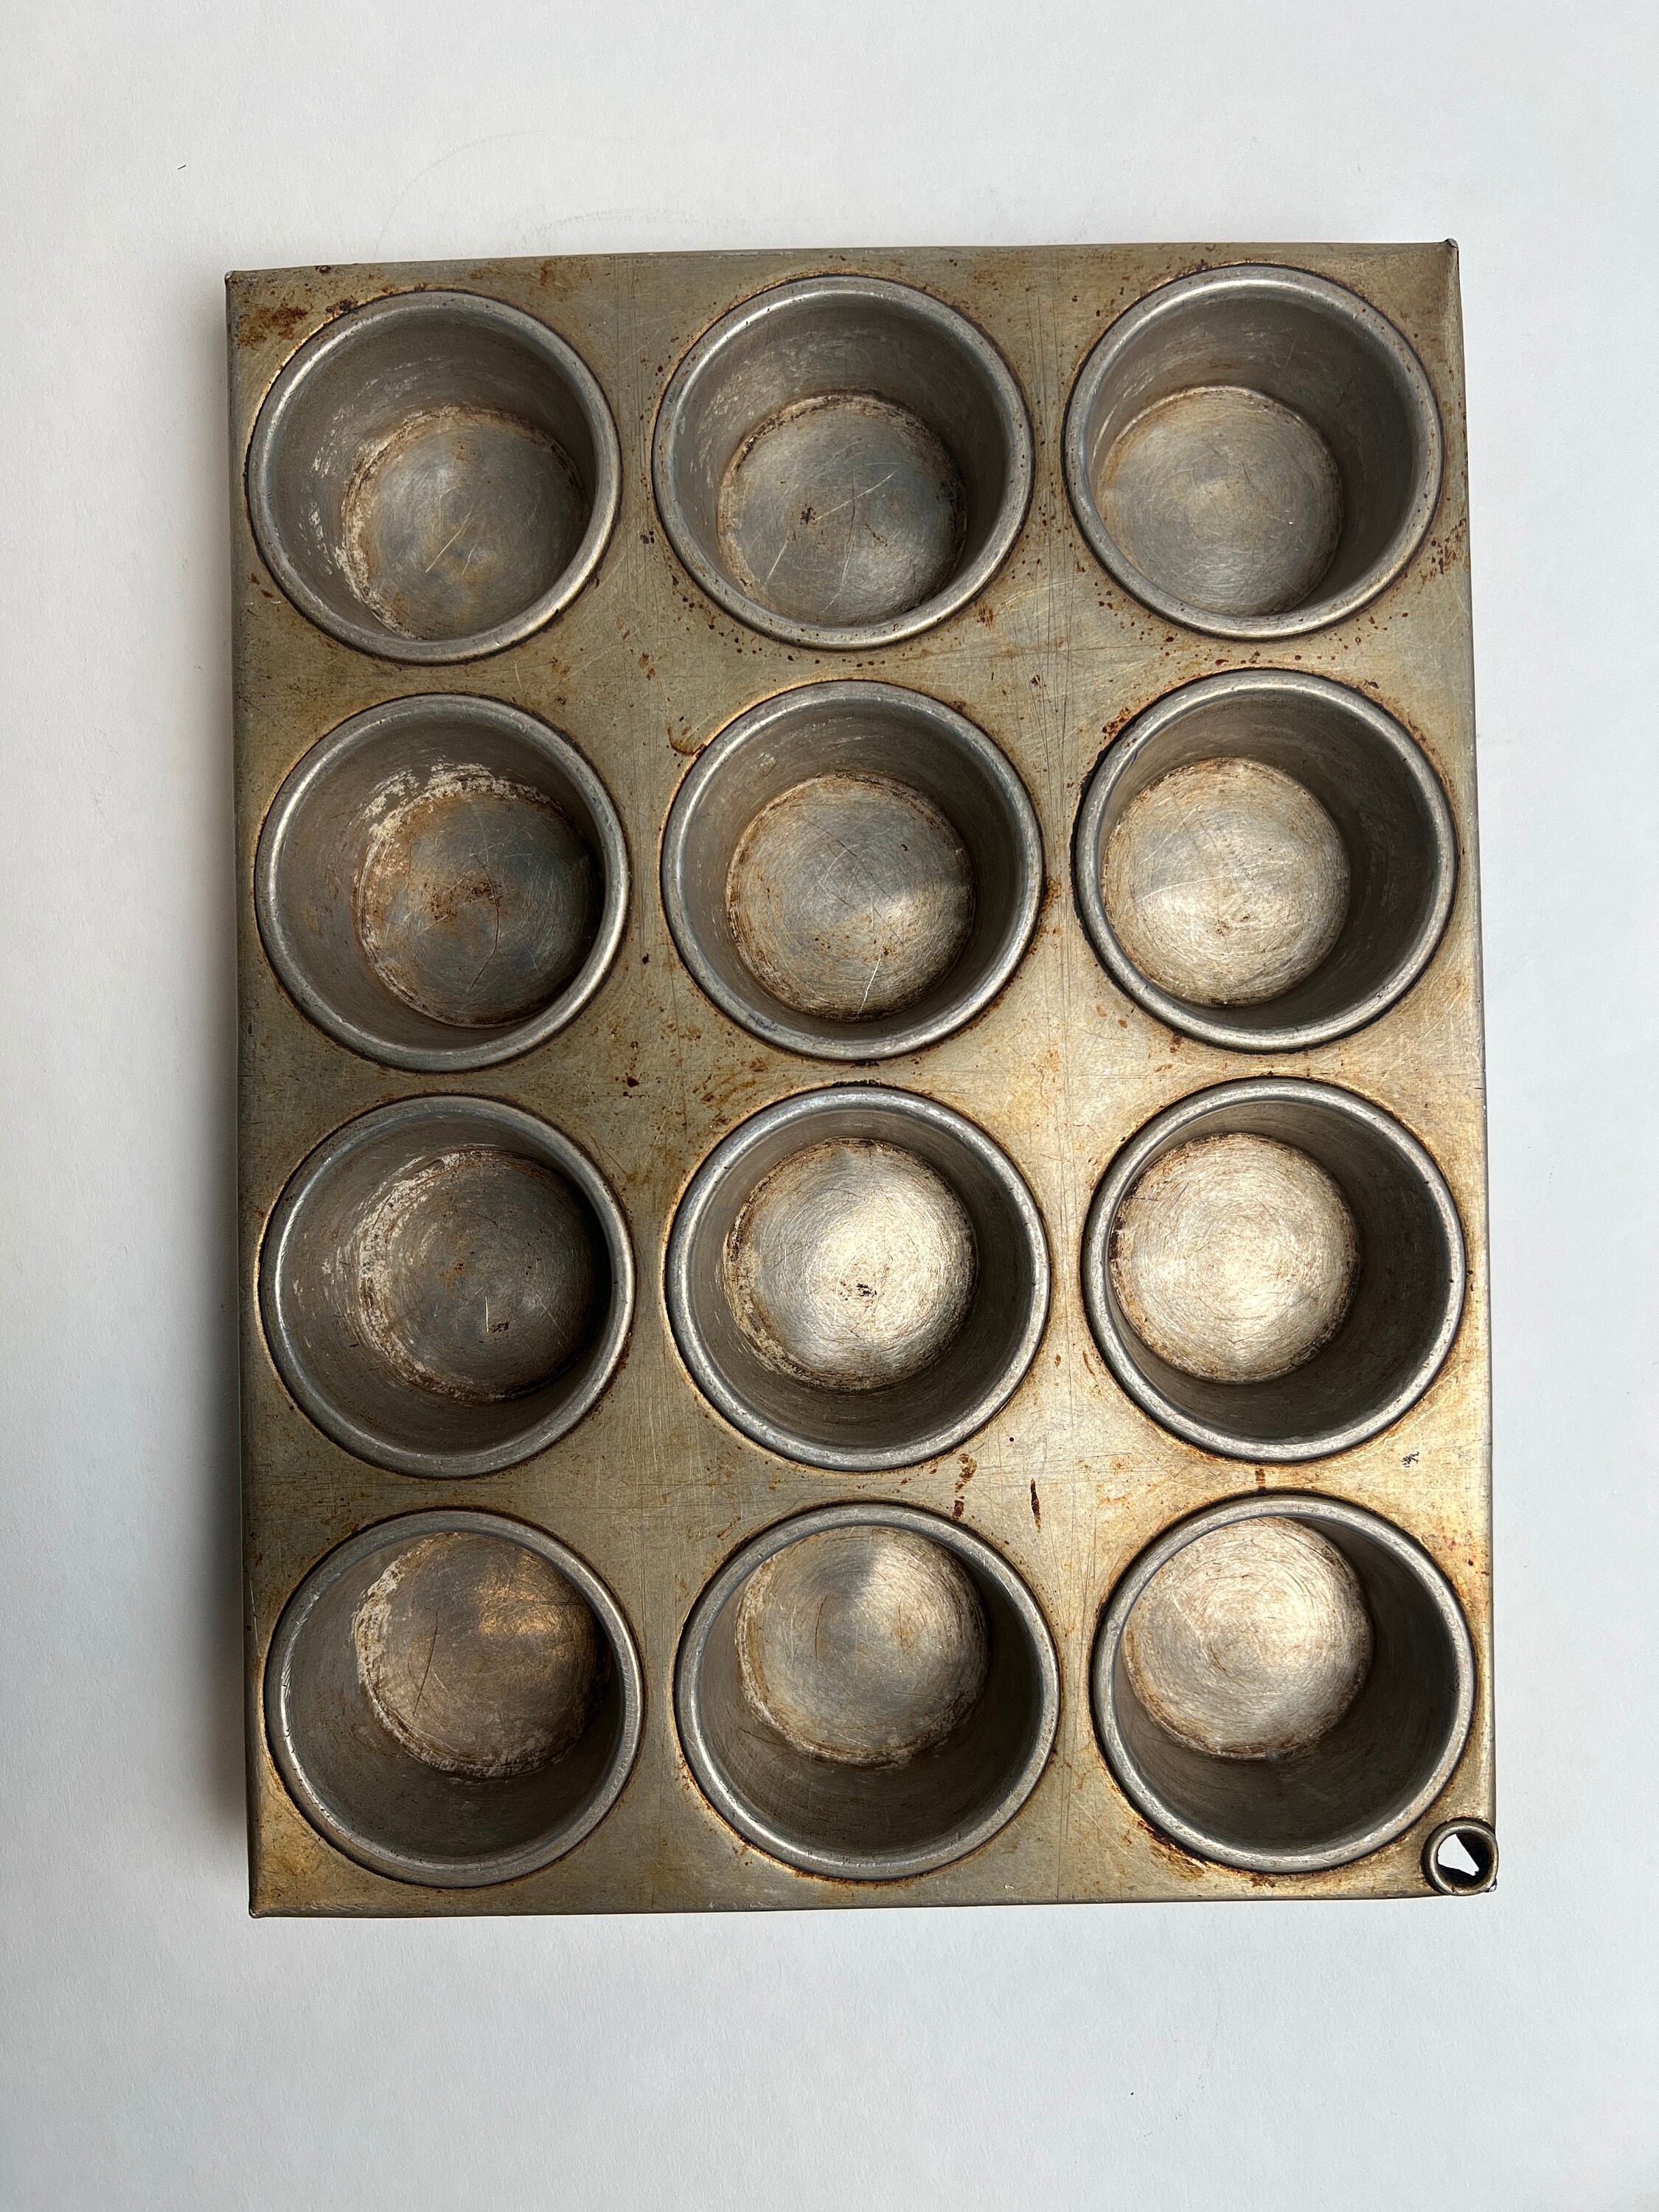 Vintage Pair Mini Muffin Tins Kitchen Pride by Mirro, Aluminum Mini Muffin  Tins 